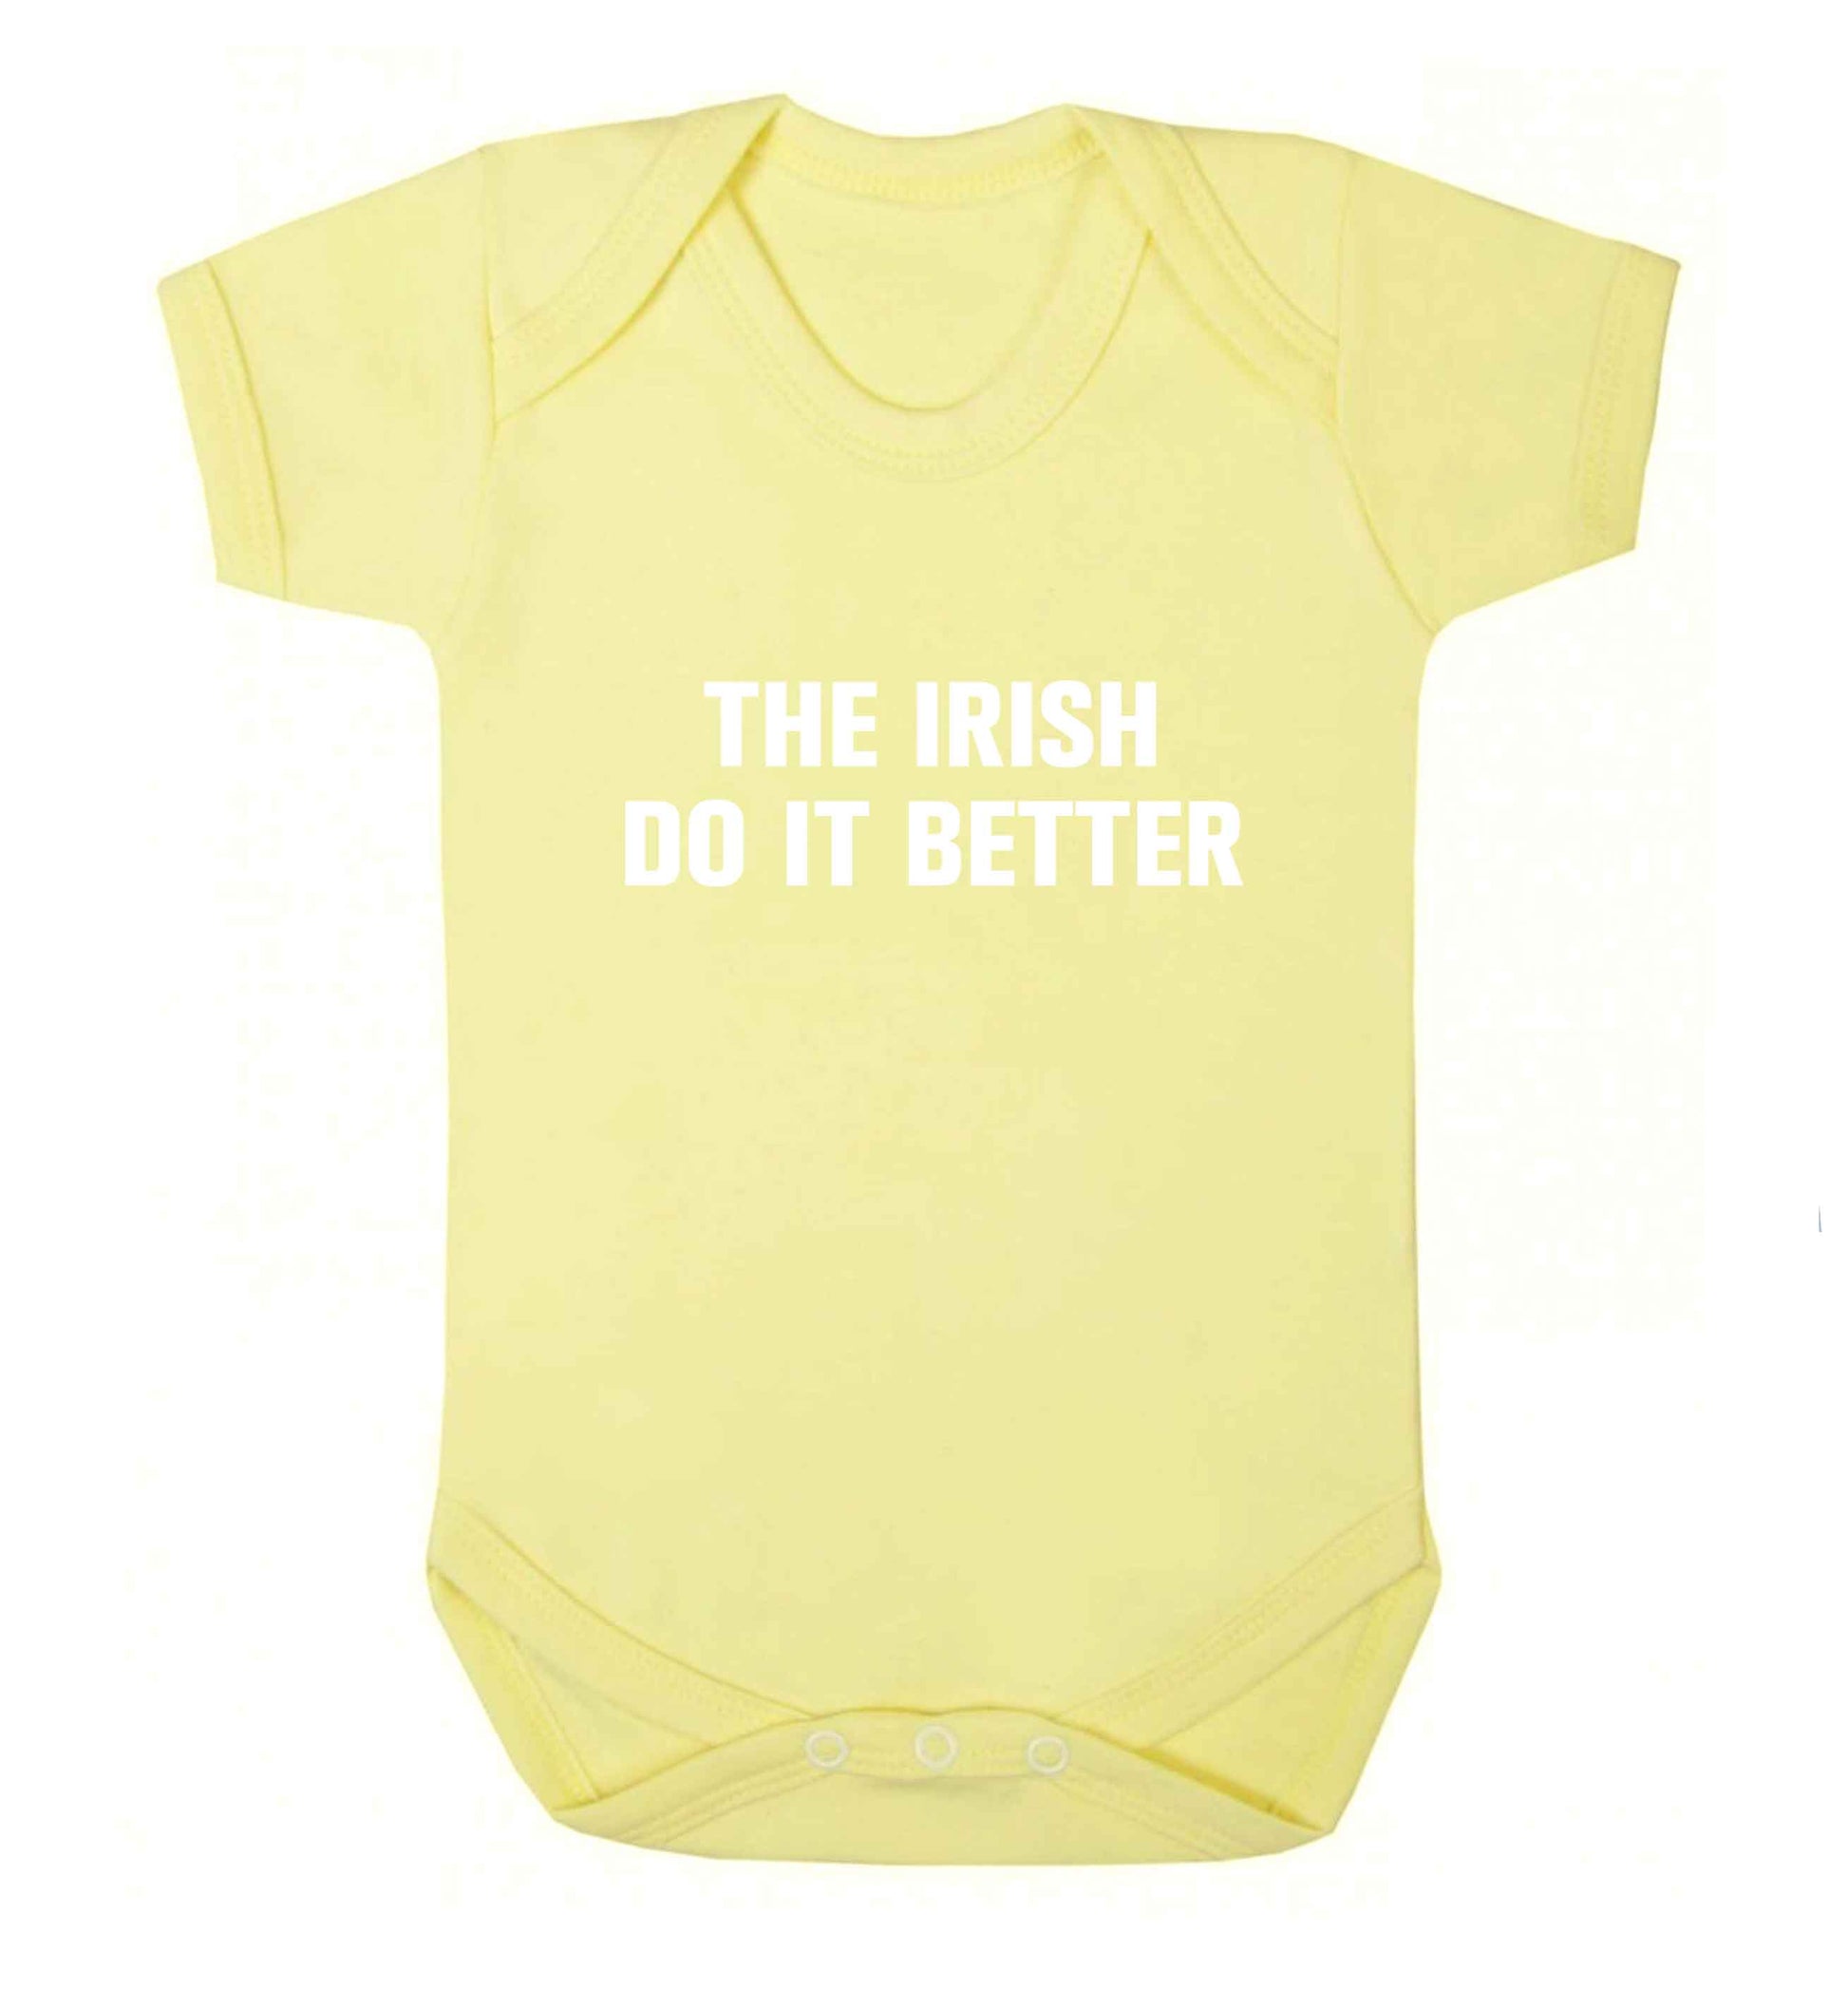 The Irish do it better baby vest pale yellow 18-24 months